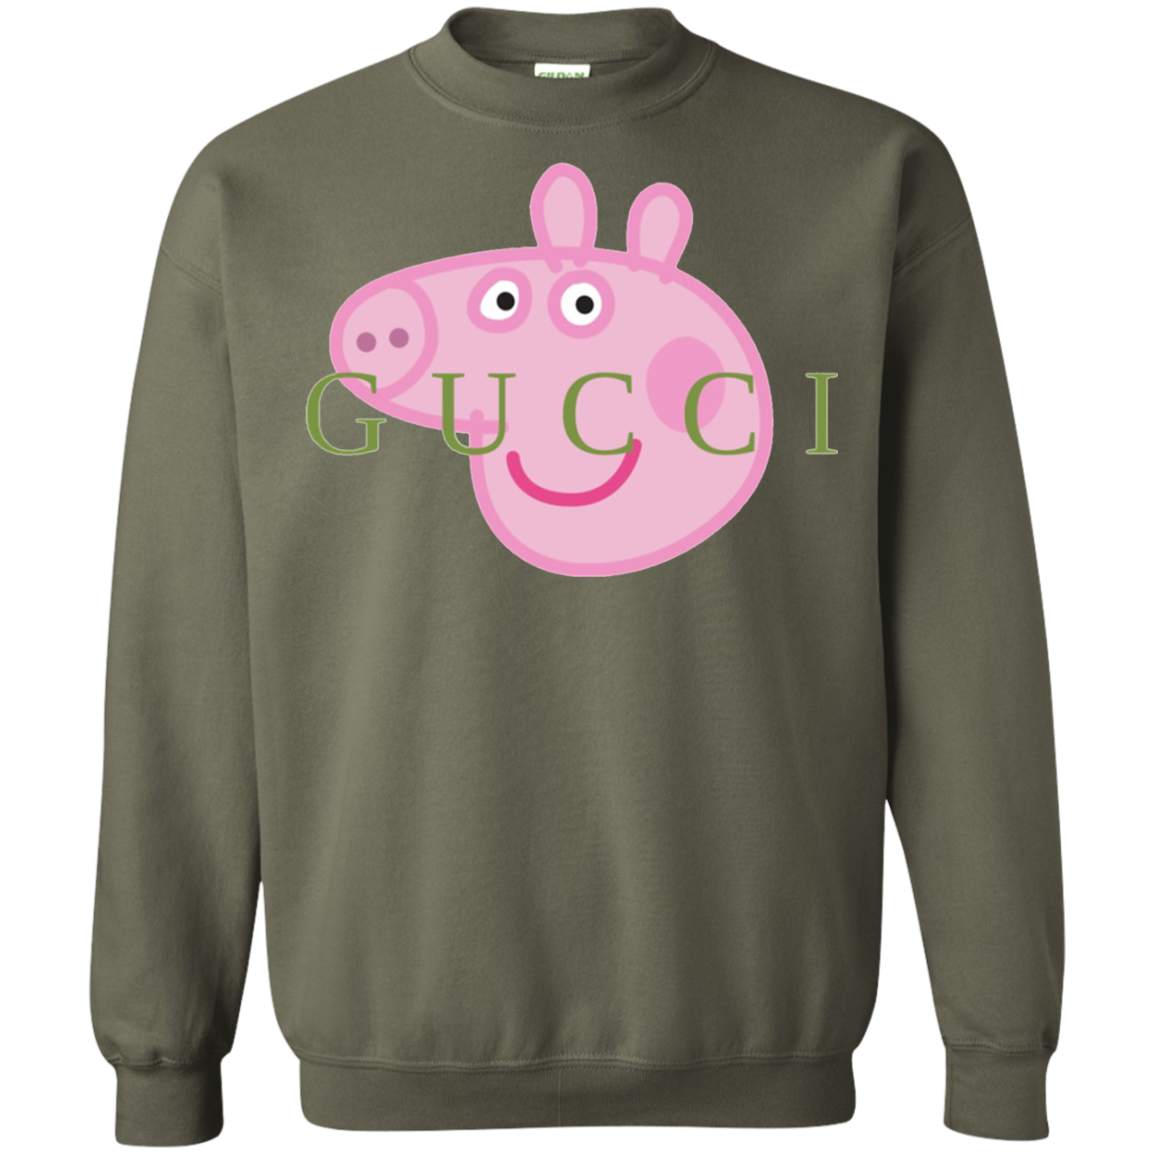 peppa pig gucci sweatshirt